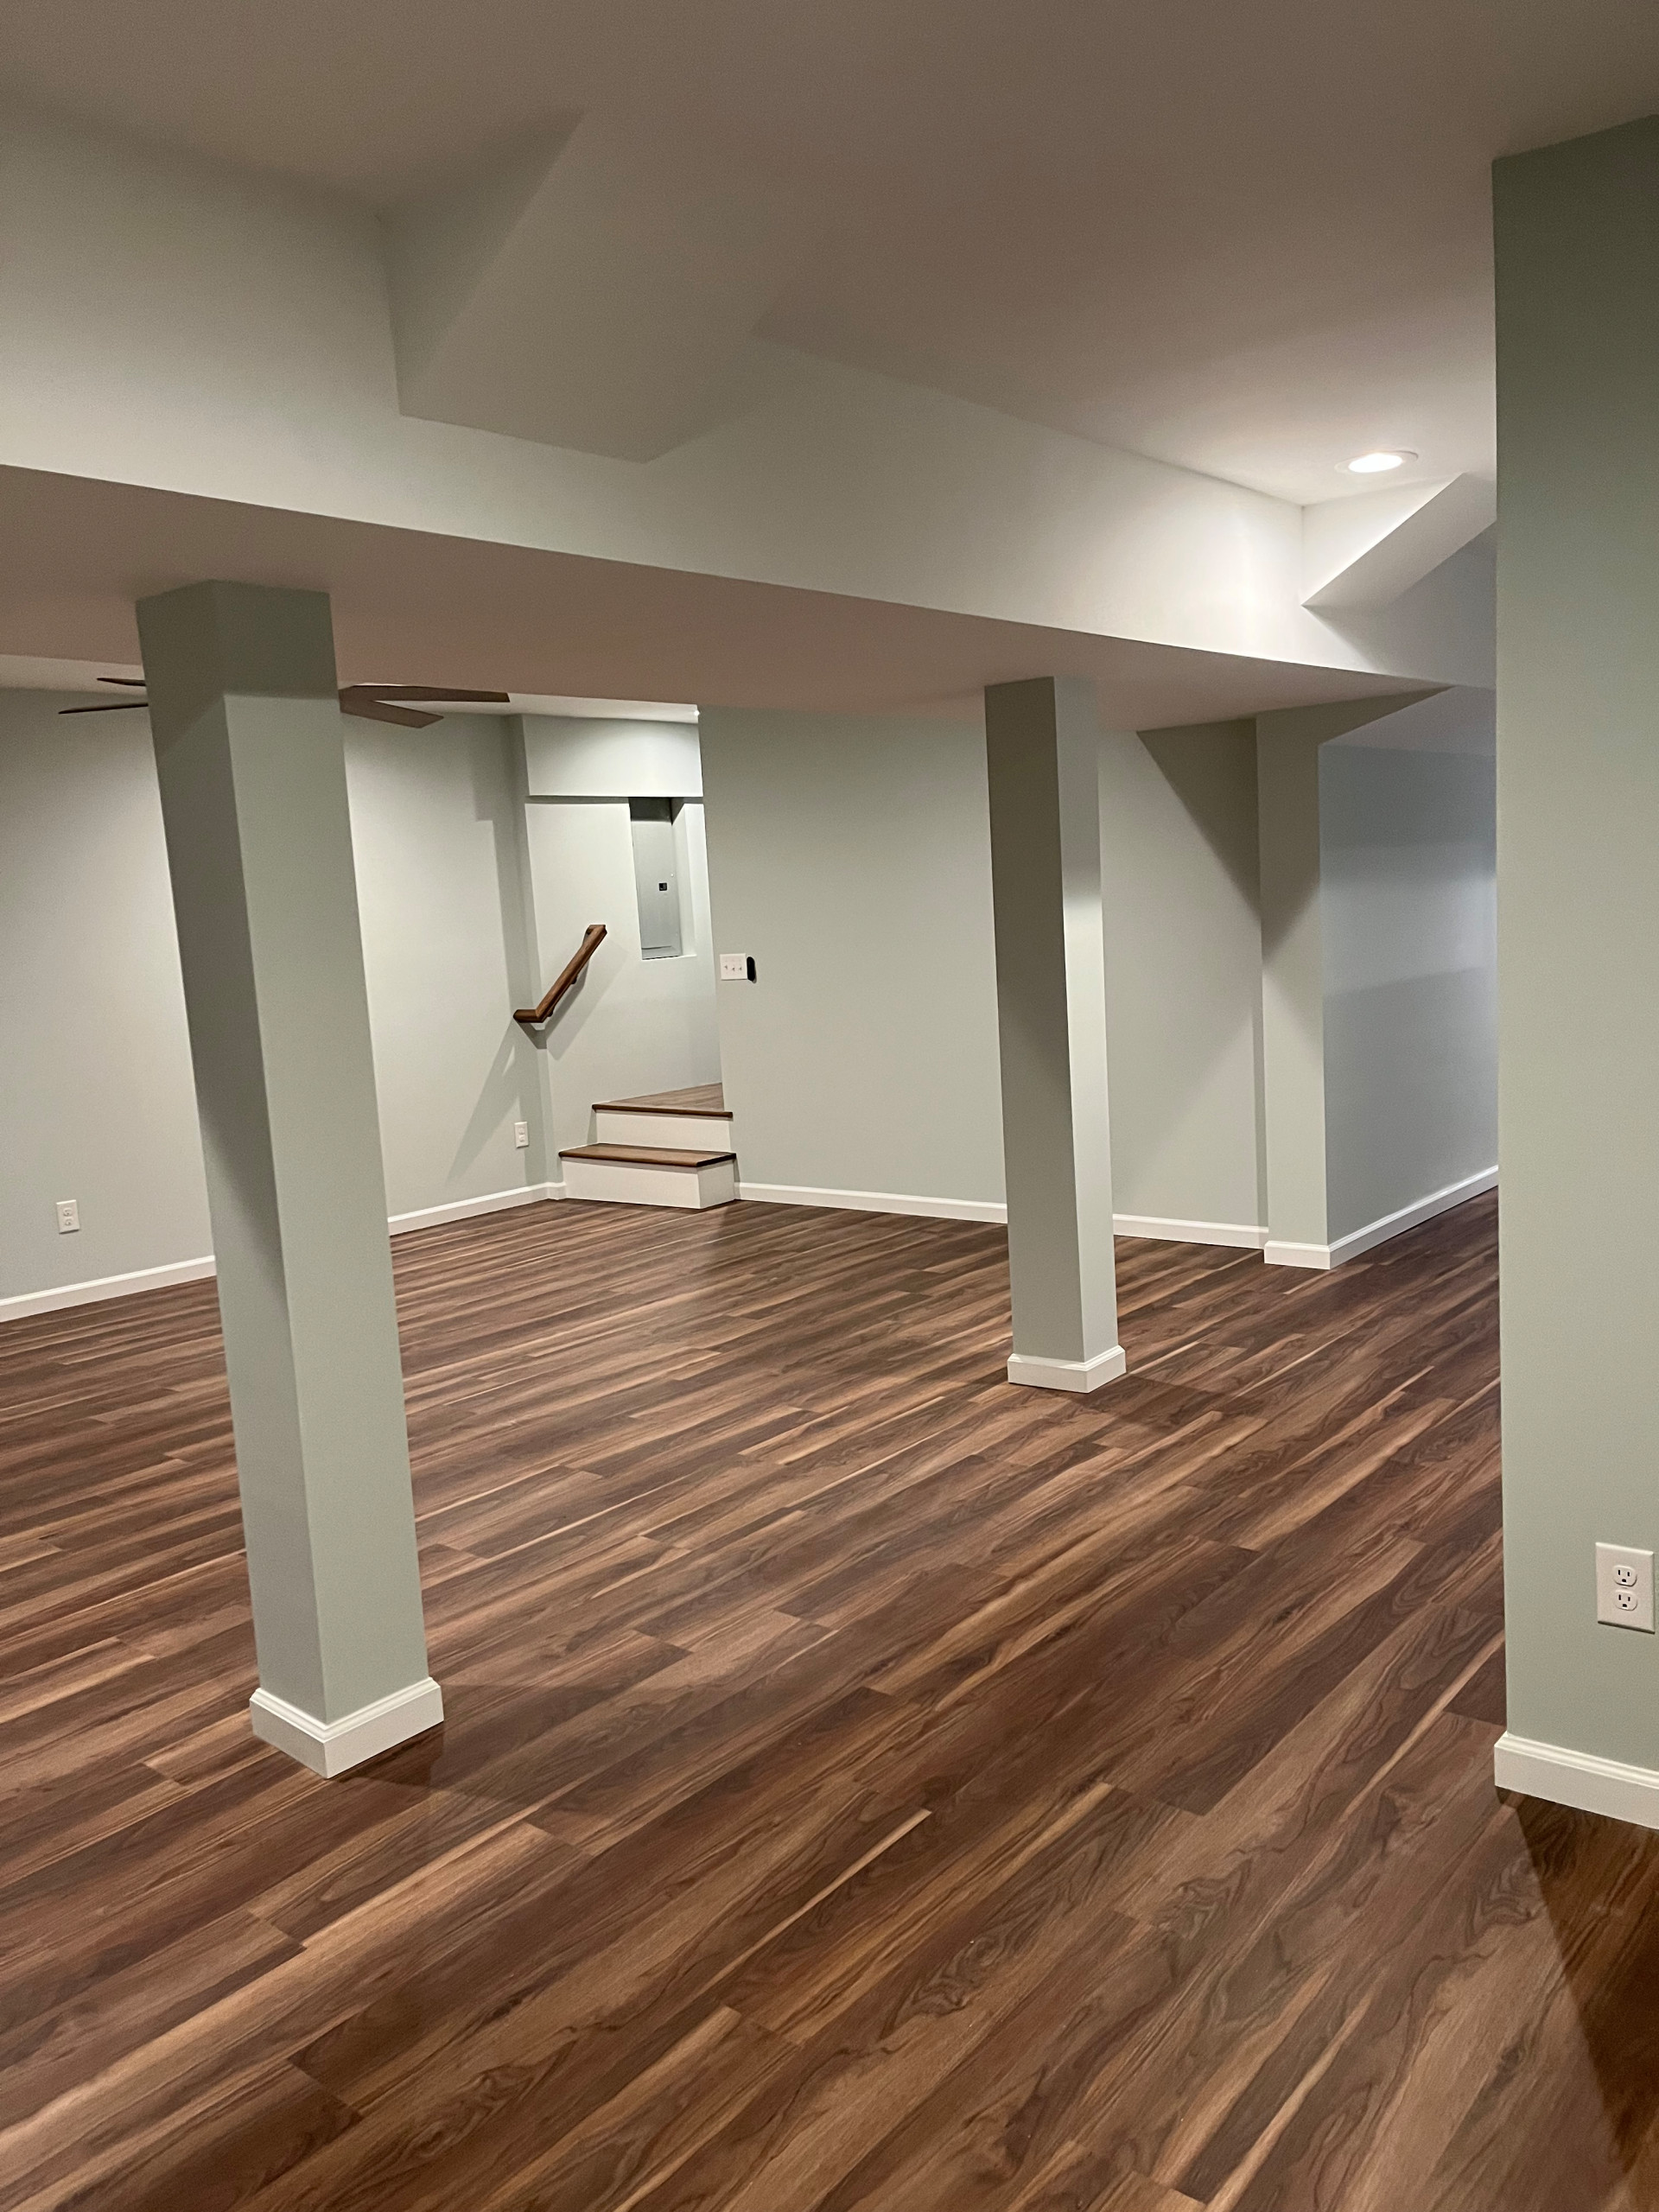 Travelers Rest remodel transformed a garage/ basement into living space